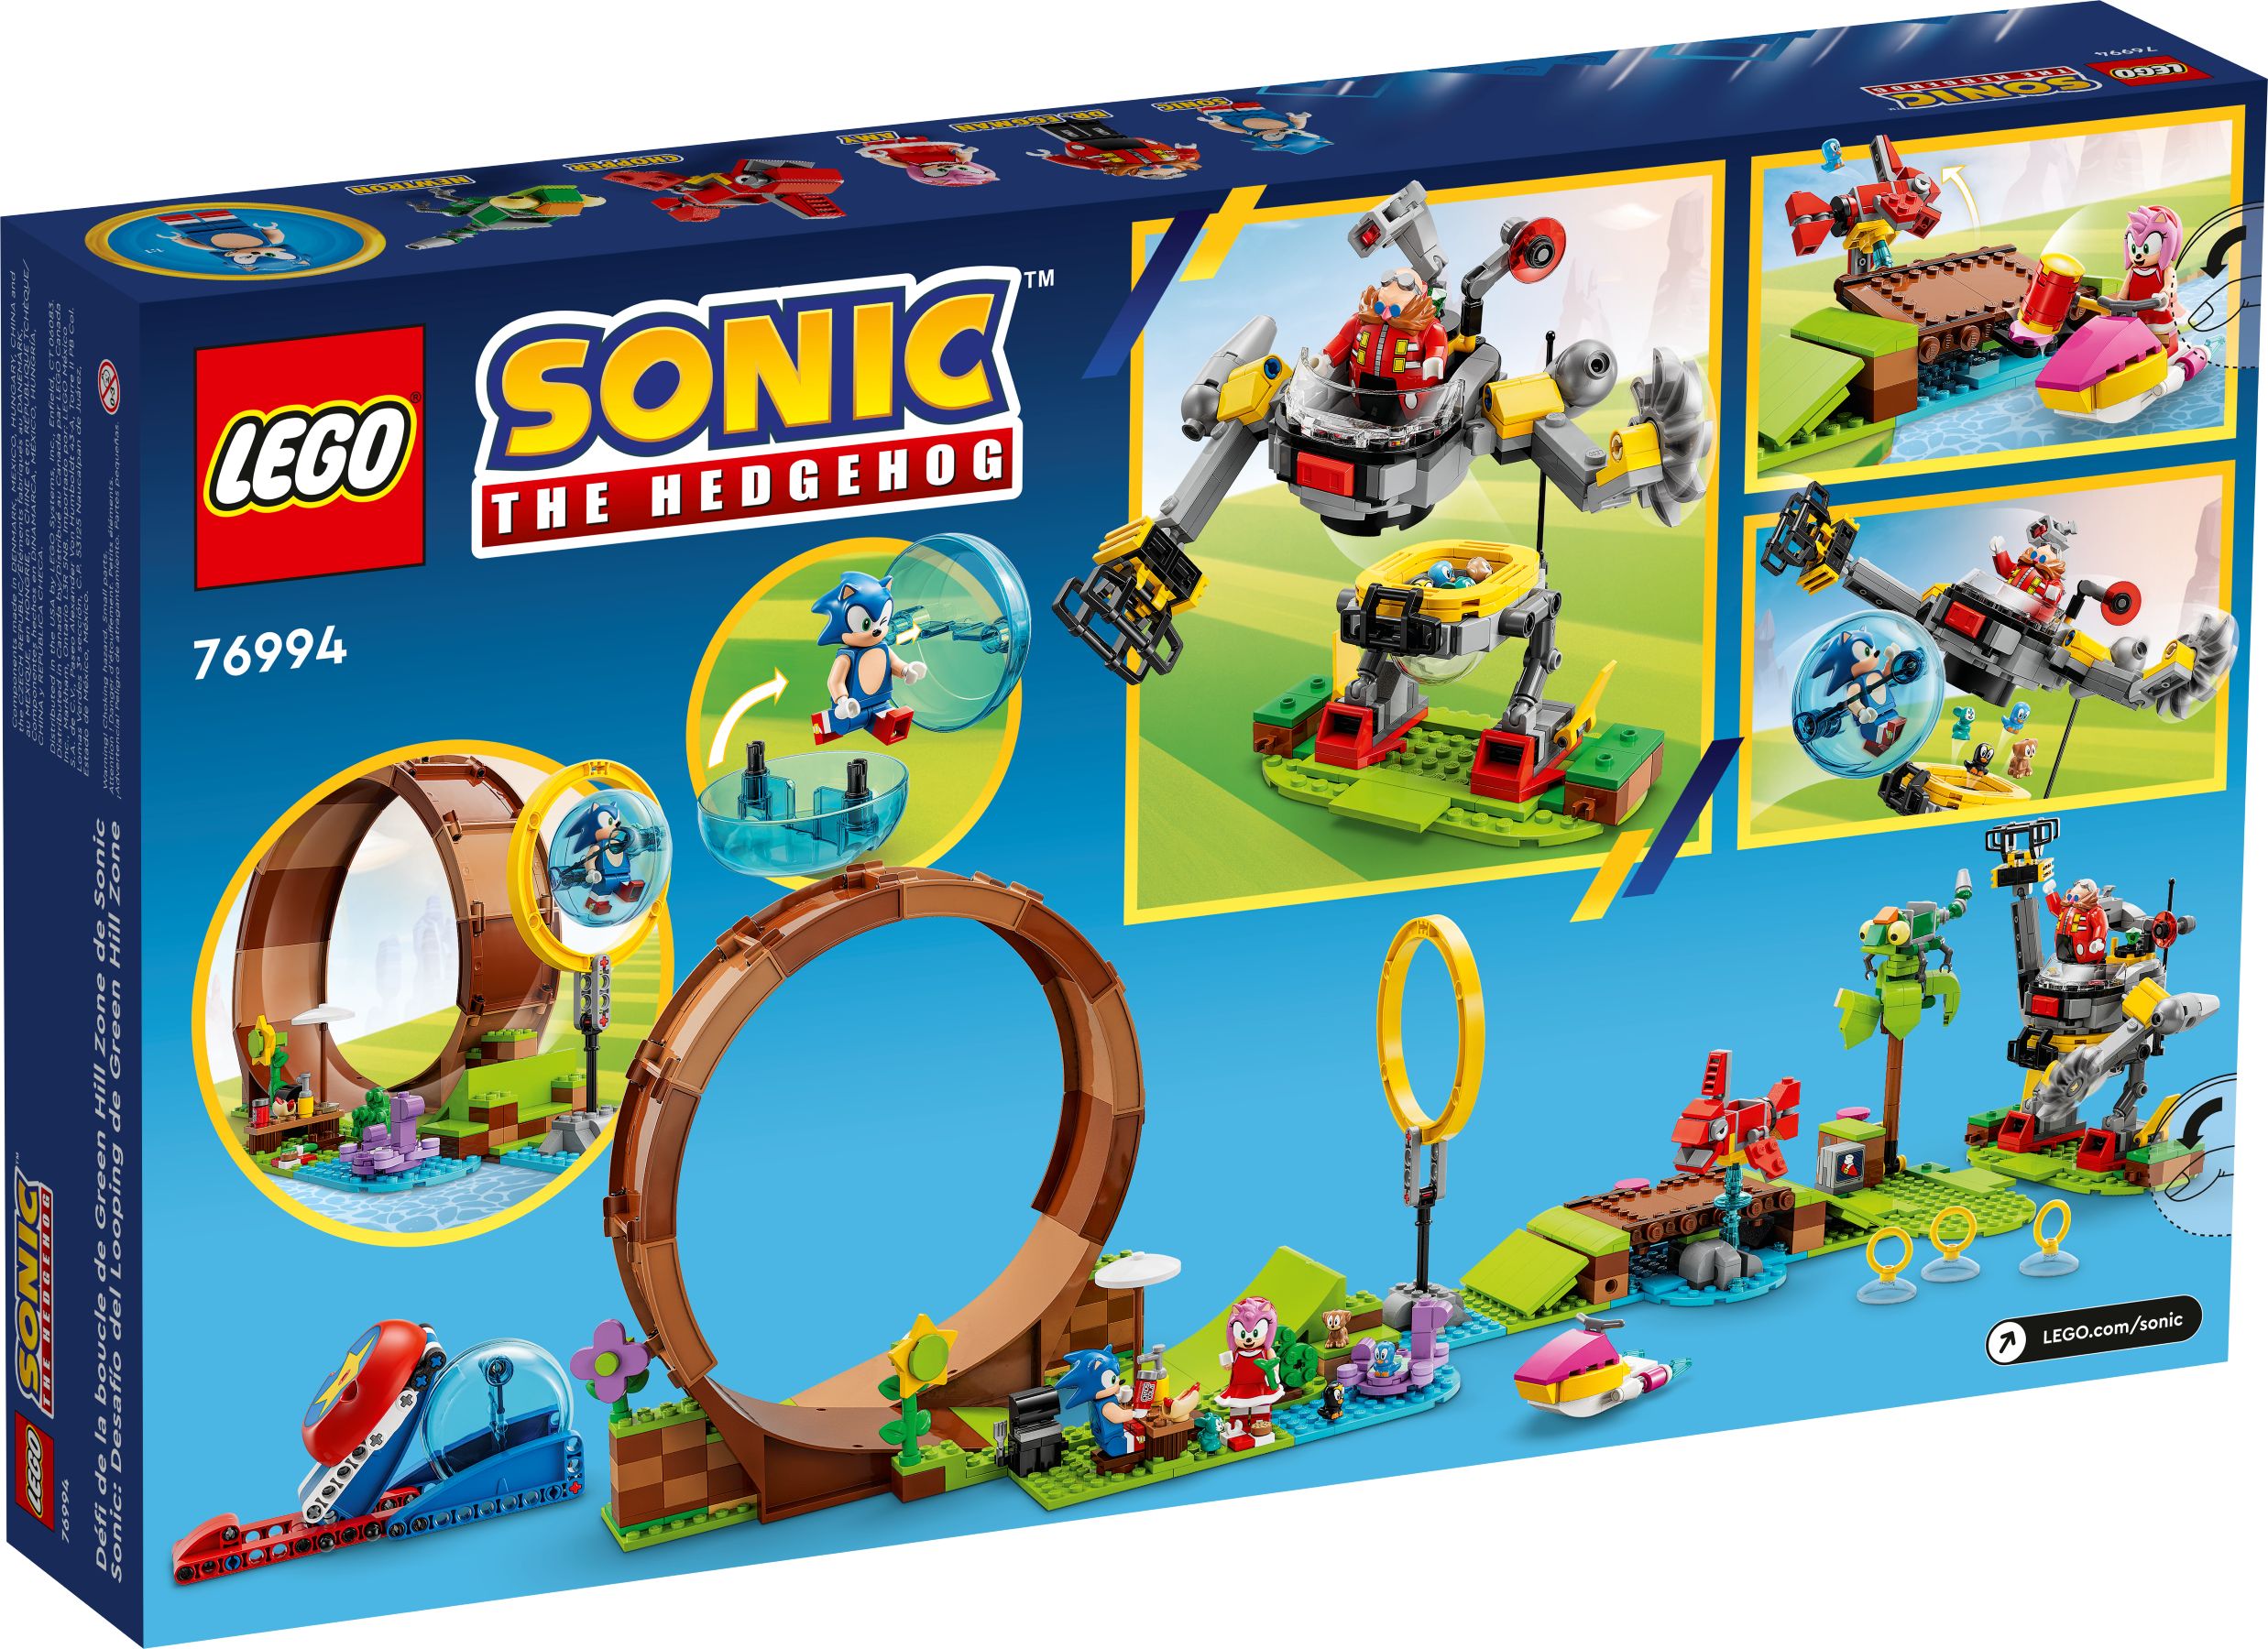 LEGO Sonic the Hedgehog 76994 Sonics Looping-Challenge in der Green Hill Zone LEGO_76994_alt9.jpg